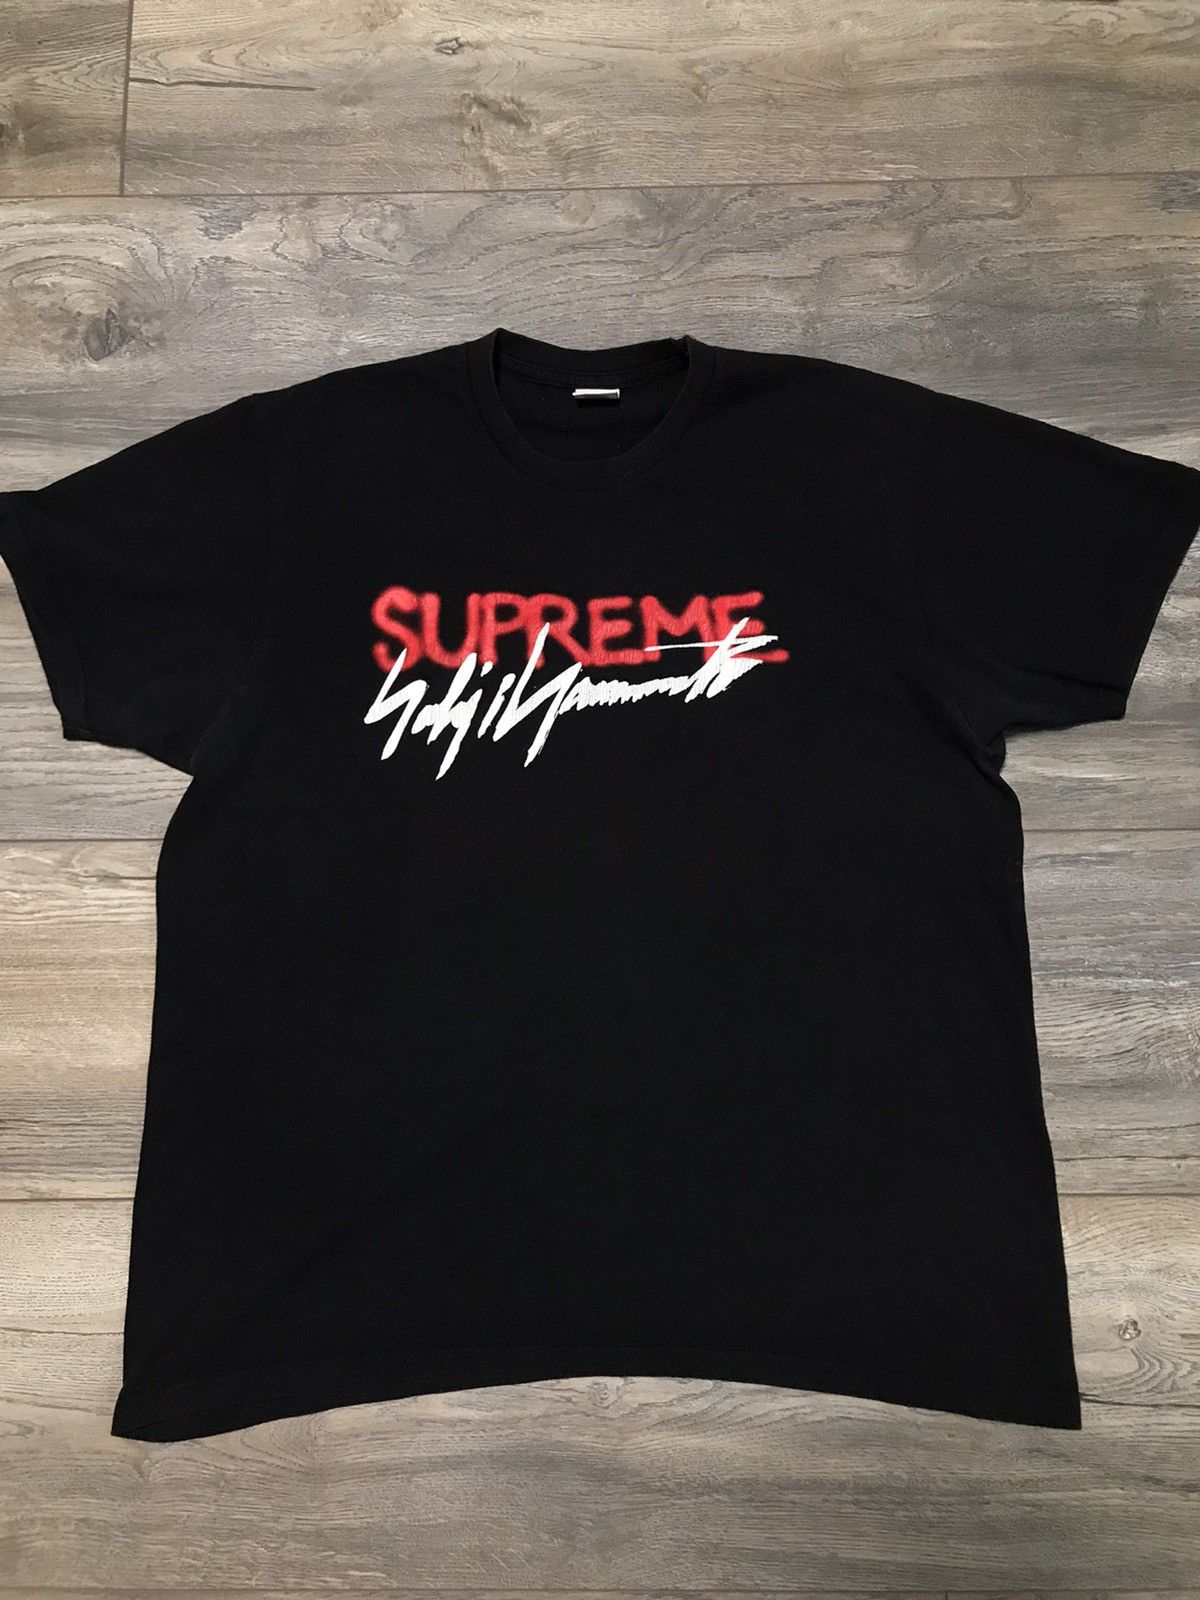 Supreme Supreme x Yohji Yamamoto T-Shirt | Grailed